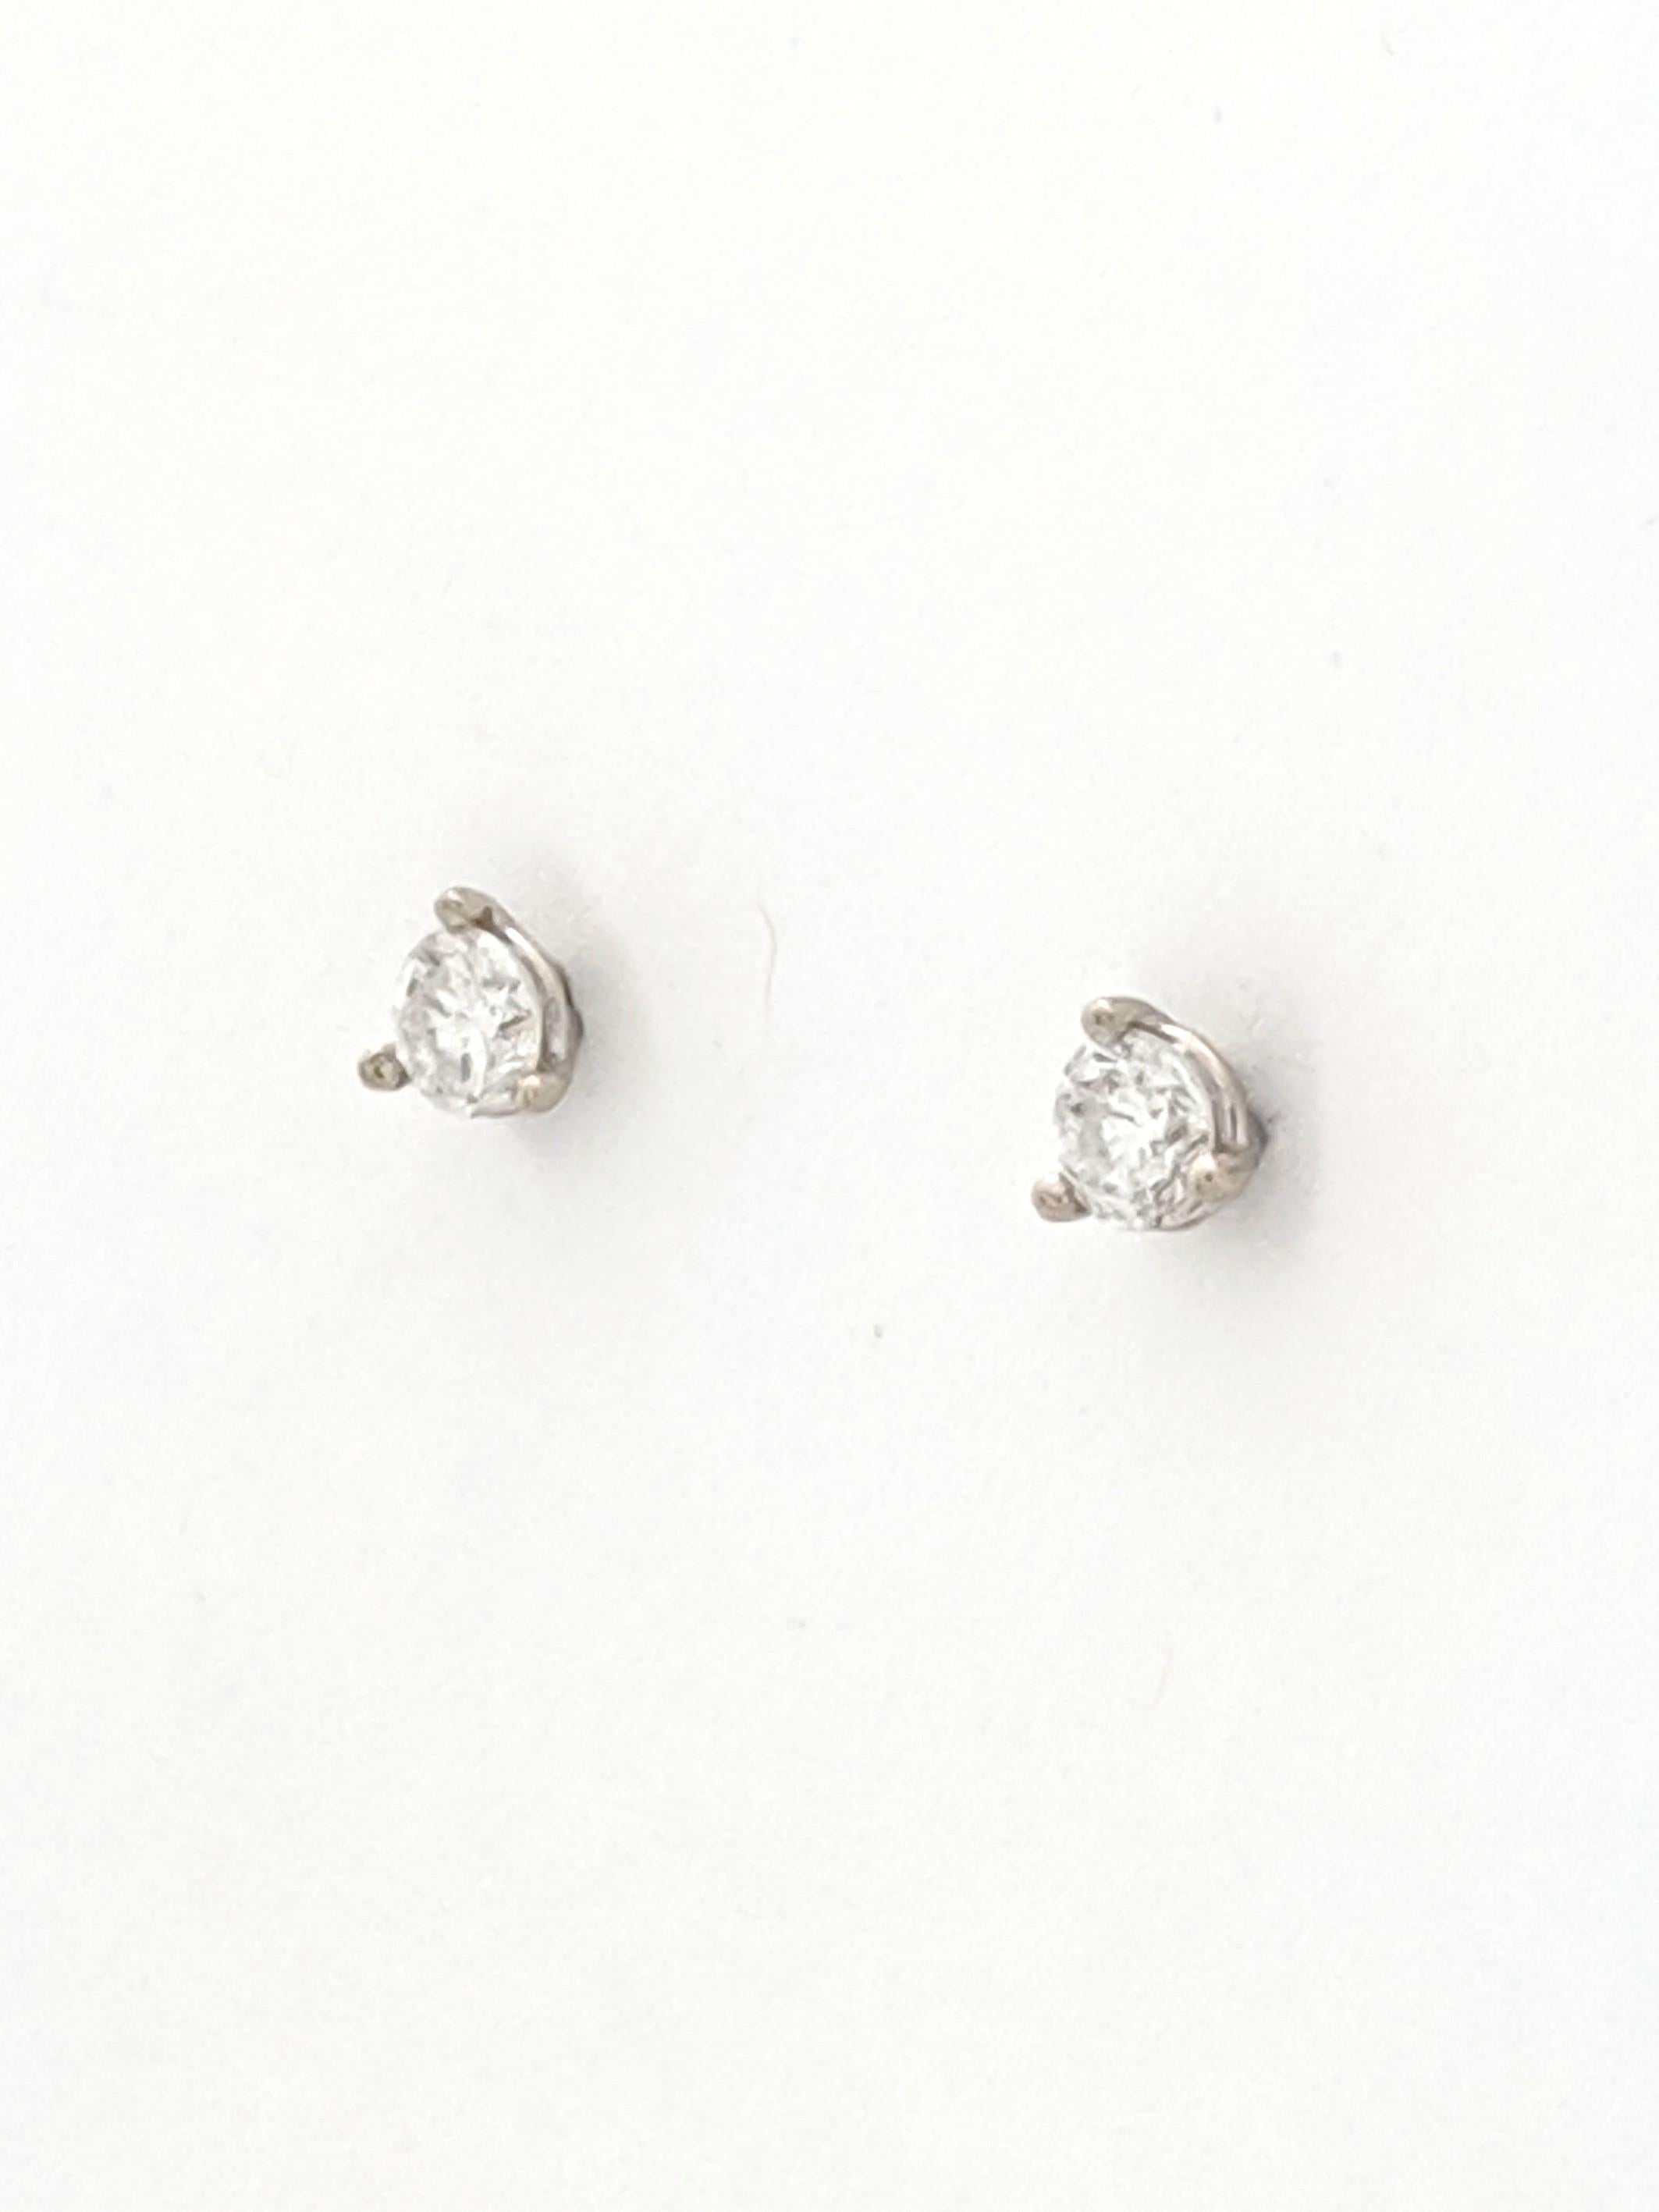 30 carat diamond earrings